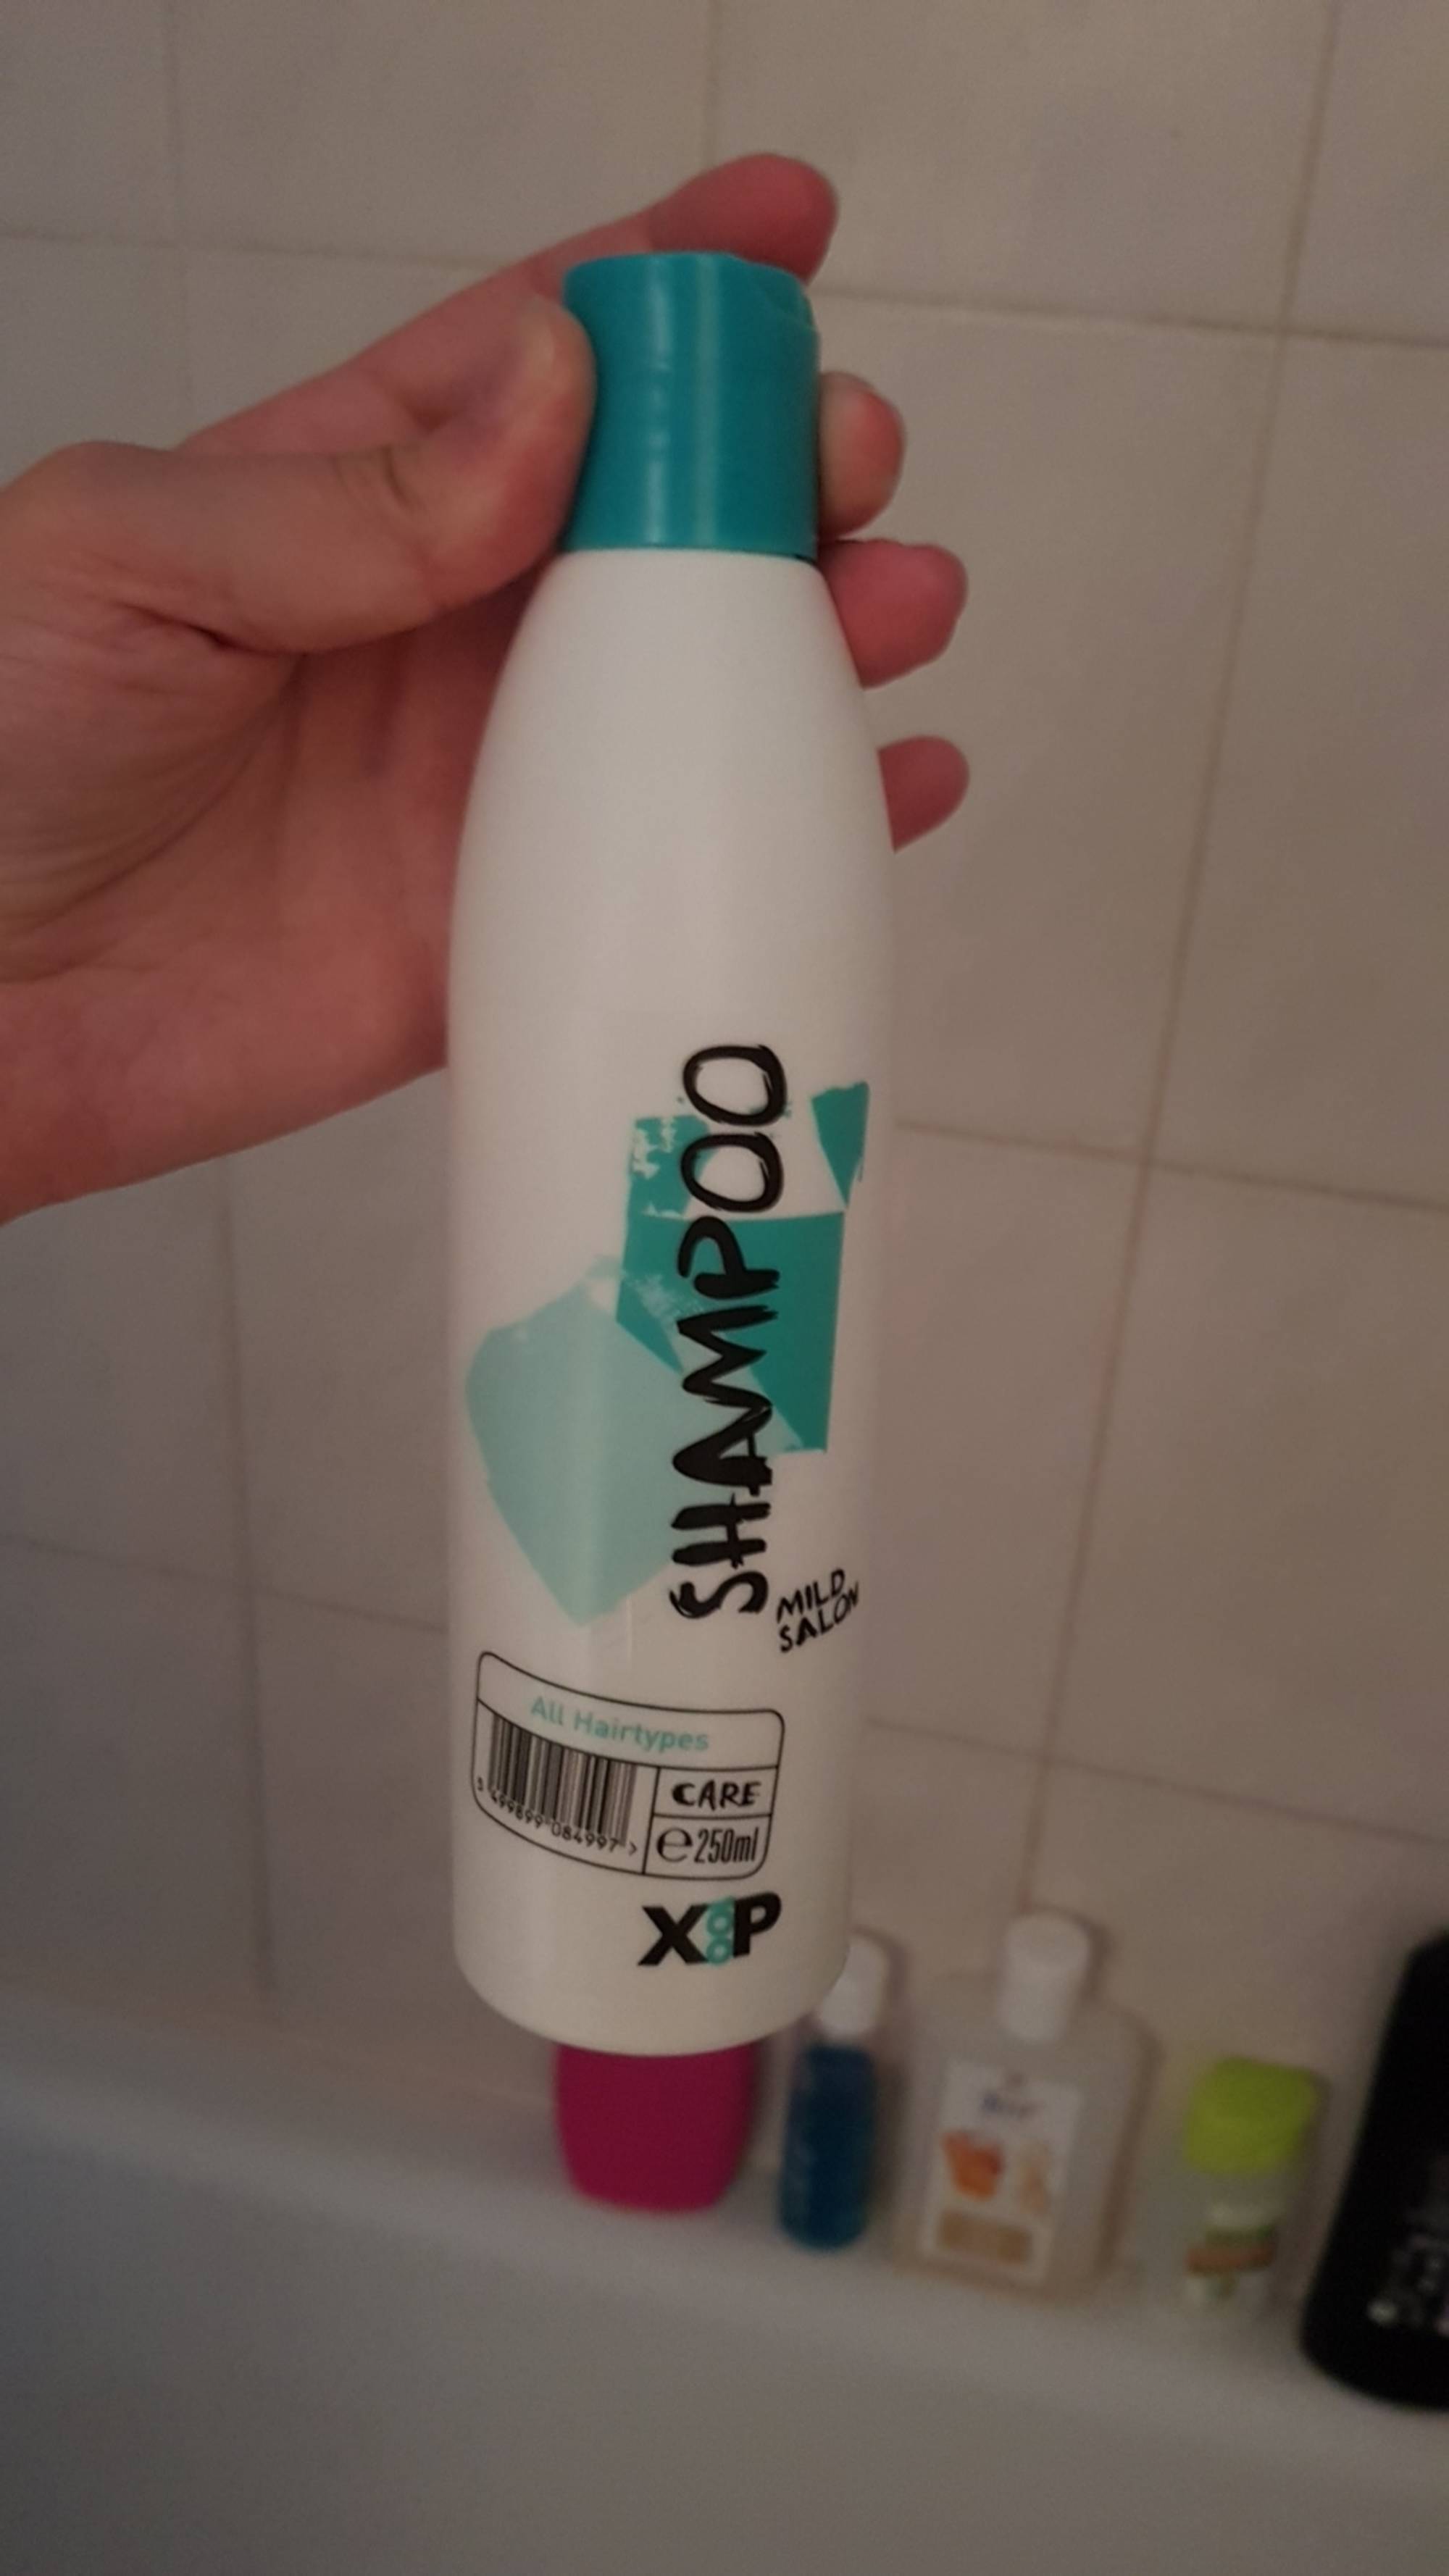 XP 100 - Shampoo mild salon